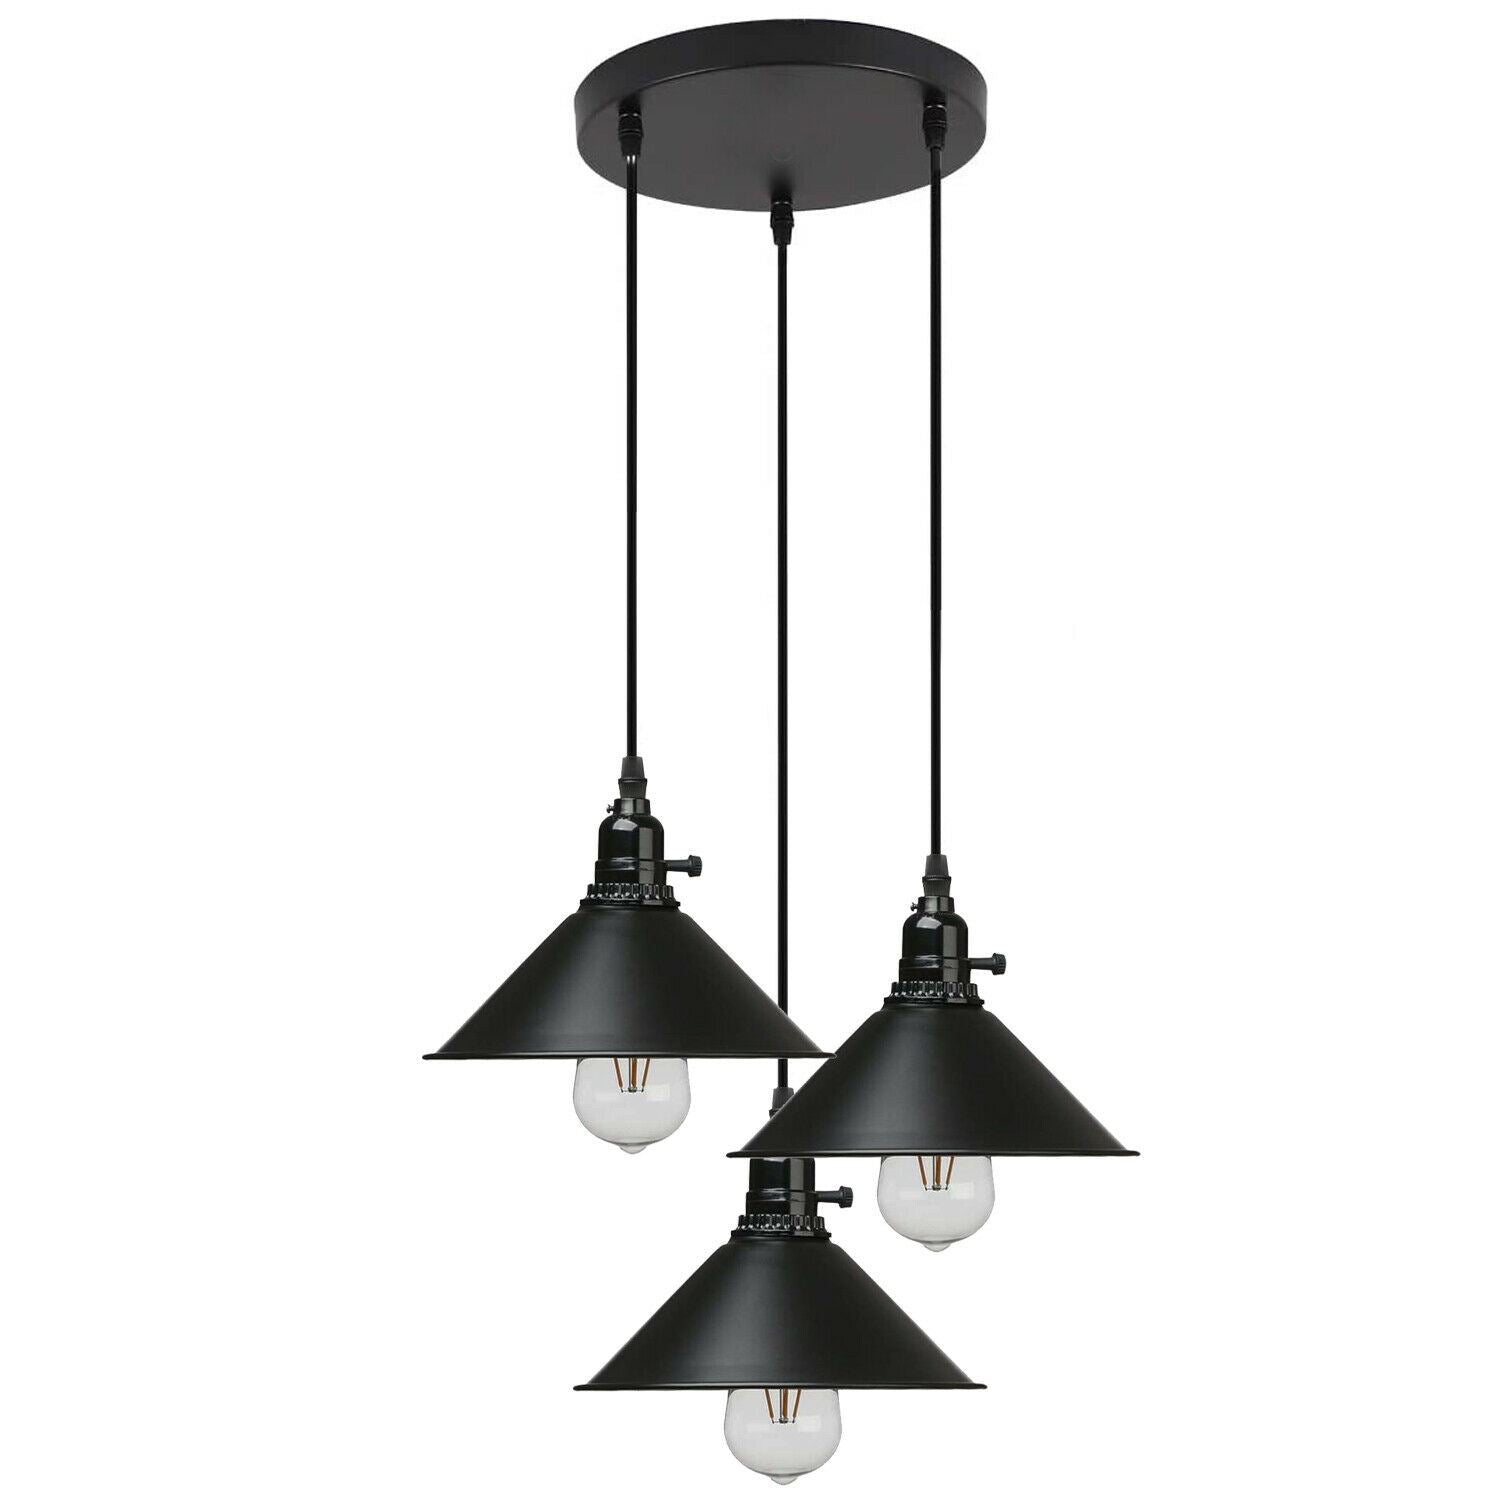 3 Way Vintage Black Ceiling Pendant Light Metal Retro Loft Hang Lampshade